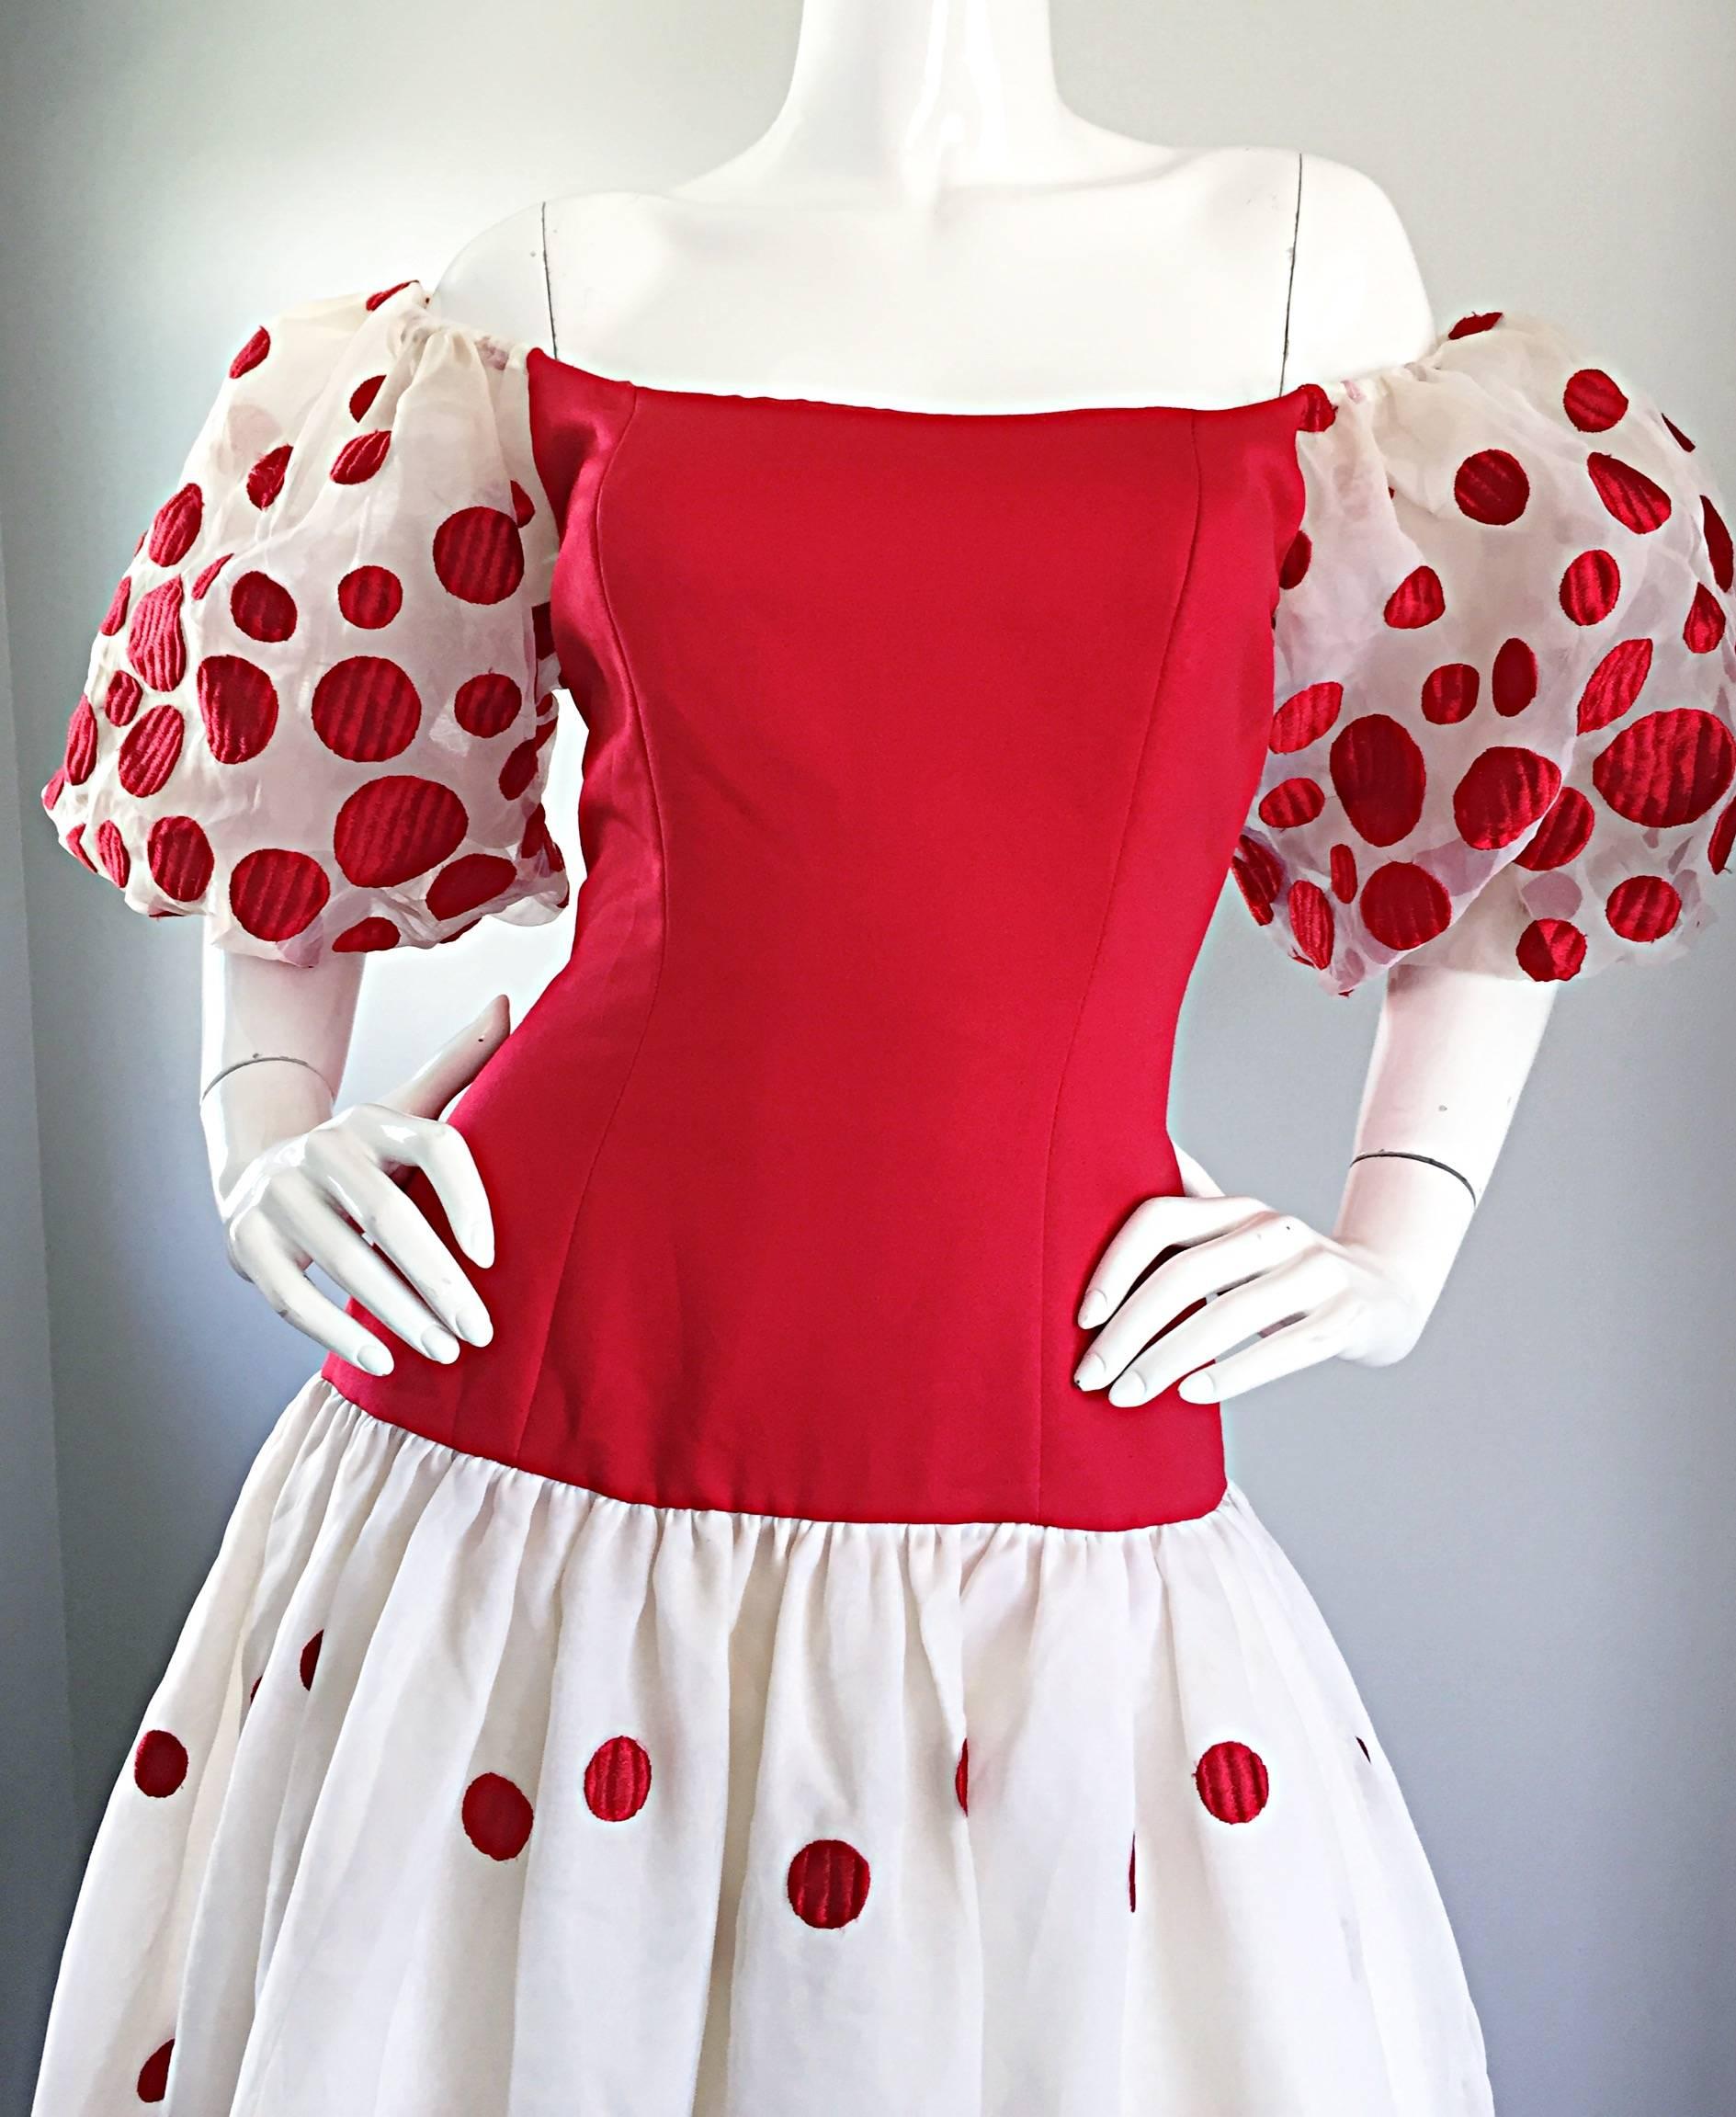 white and red polka dot dress